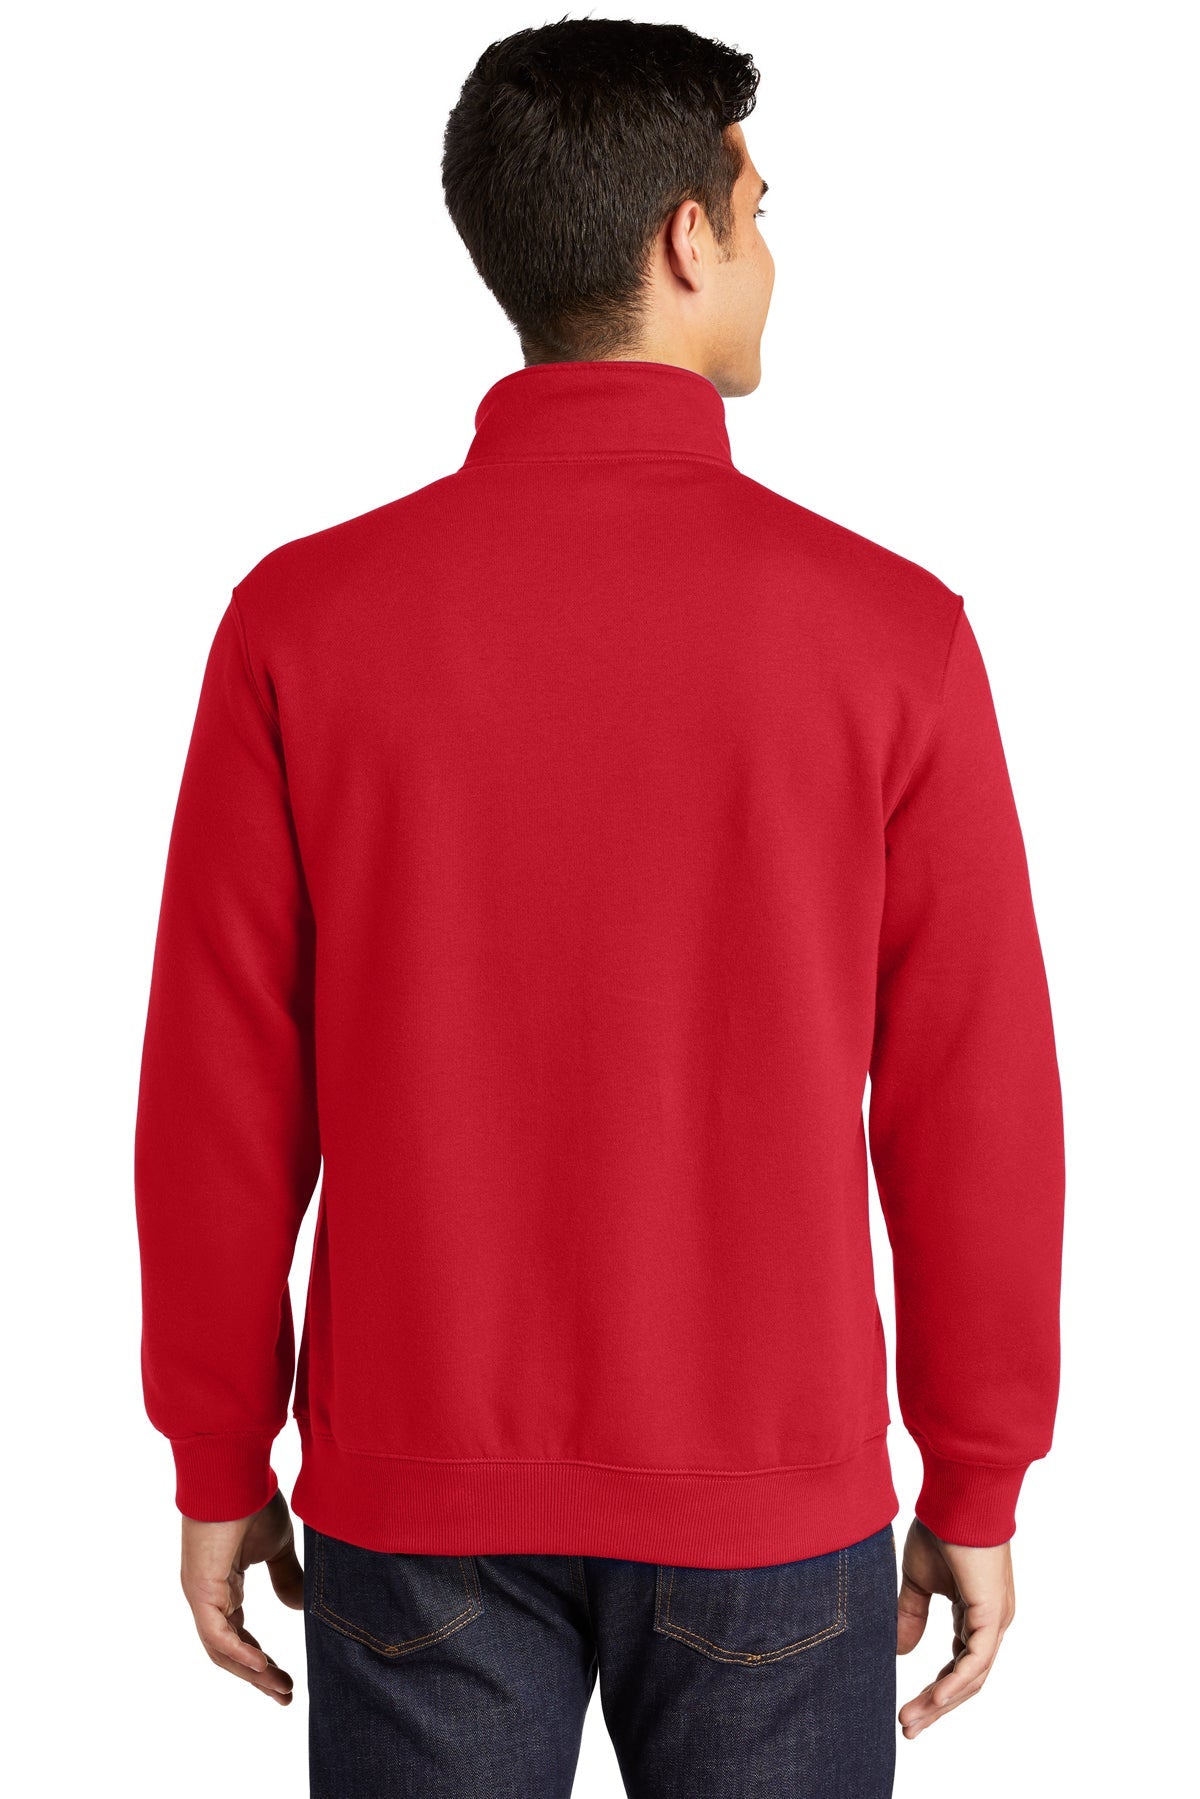 sport-tek_st253 _true red_company_logo_sweatshirts